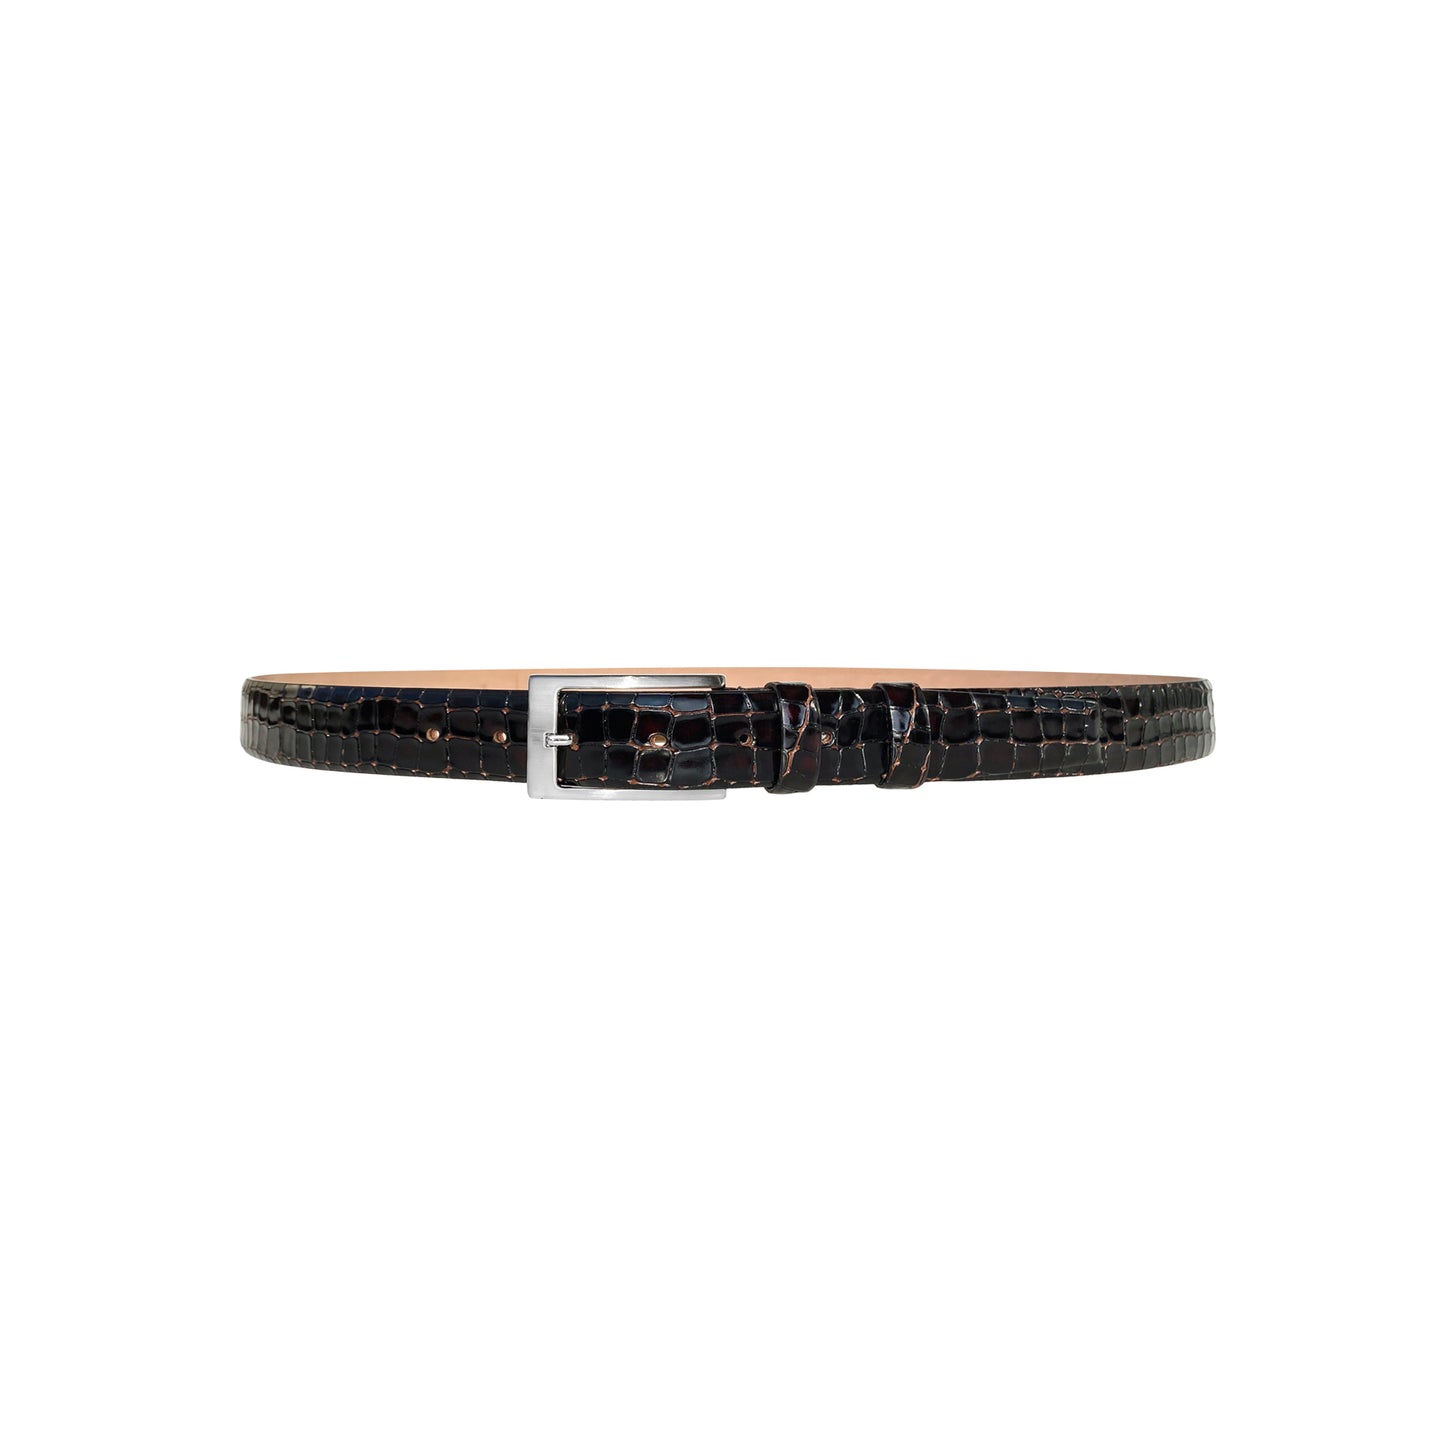 CBelt -3470 Croco Leather Belt - Brown